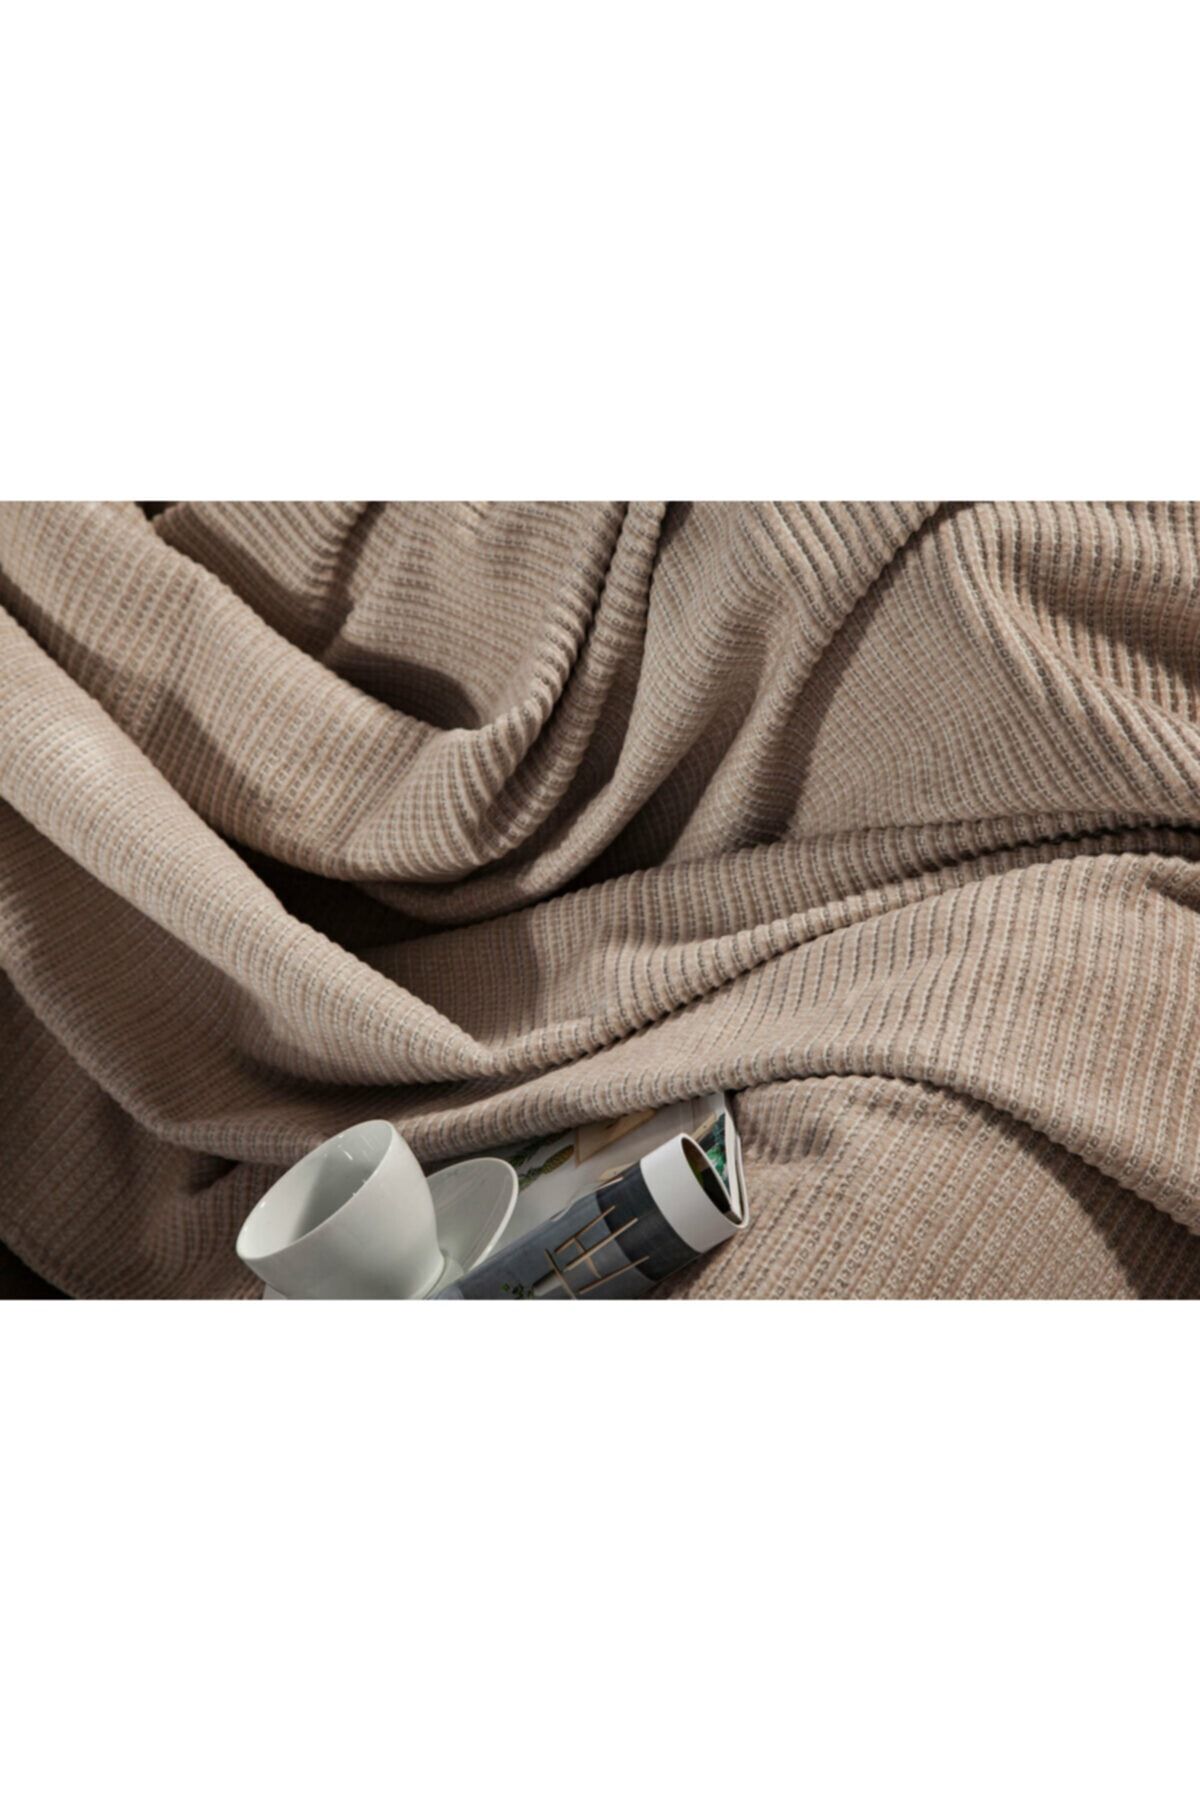 Doqu Home Softy Battaniye Tek Kişilik (150x200) Bej